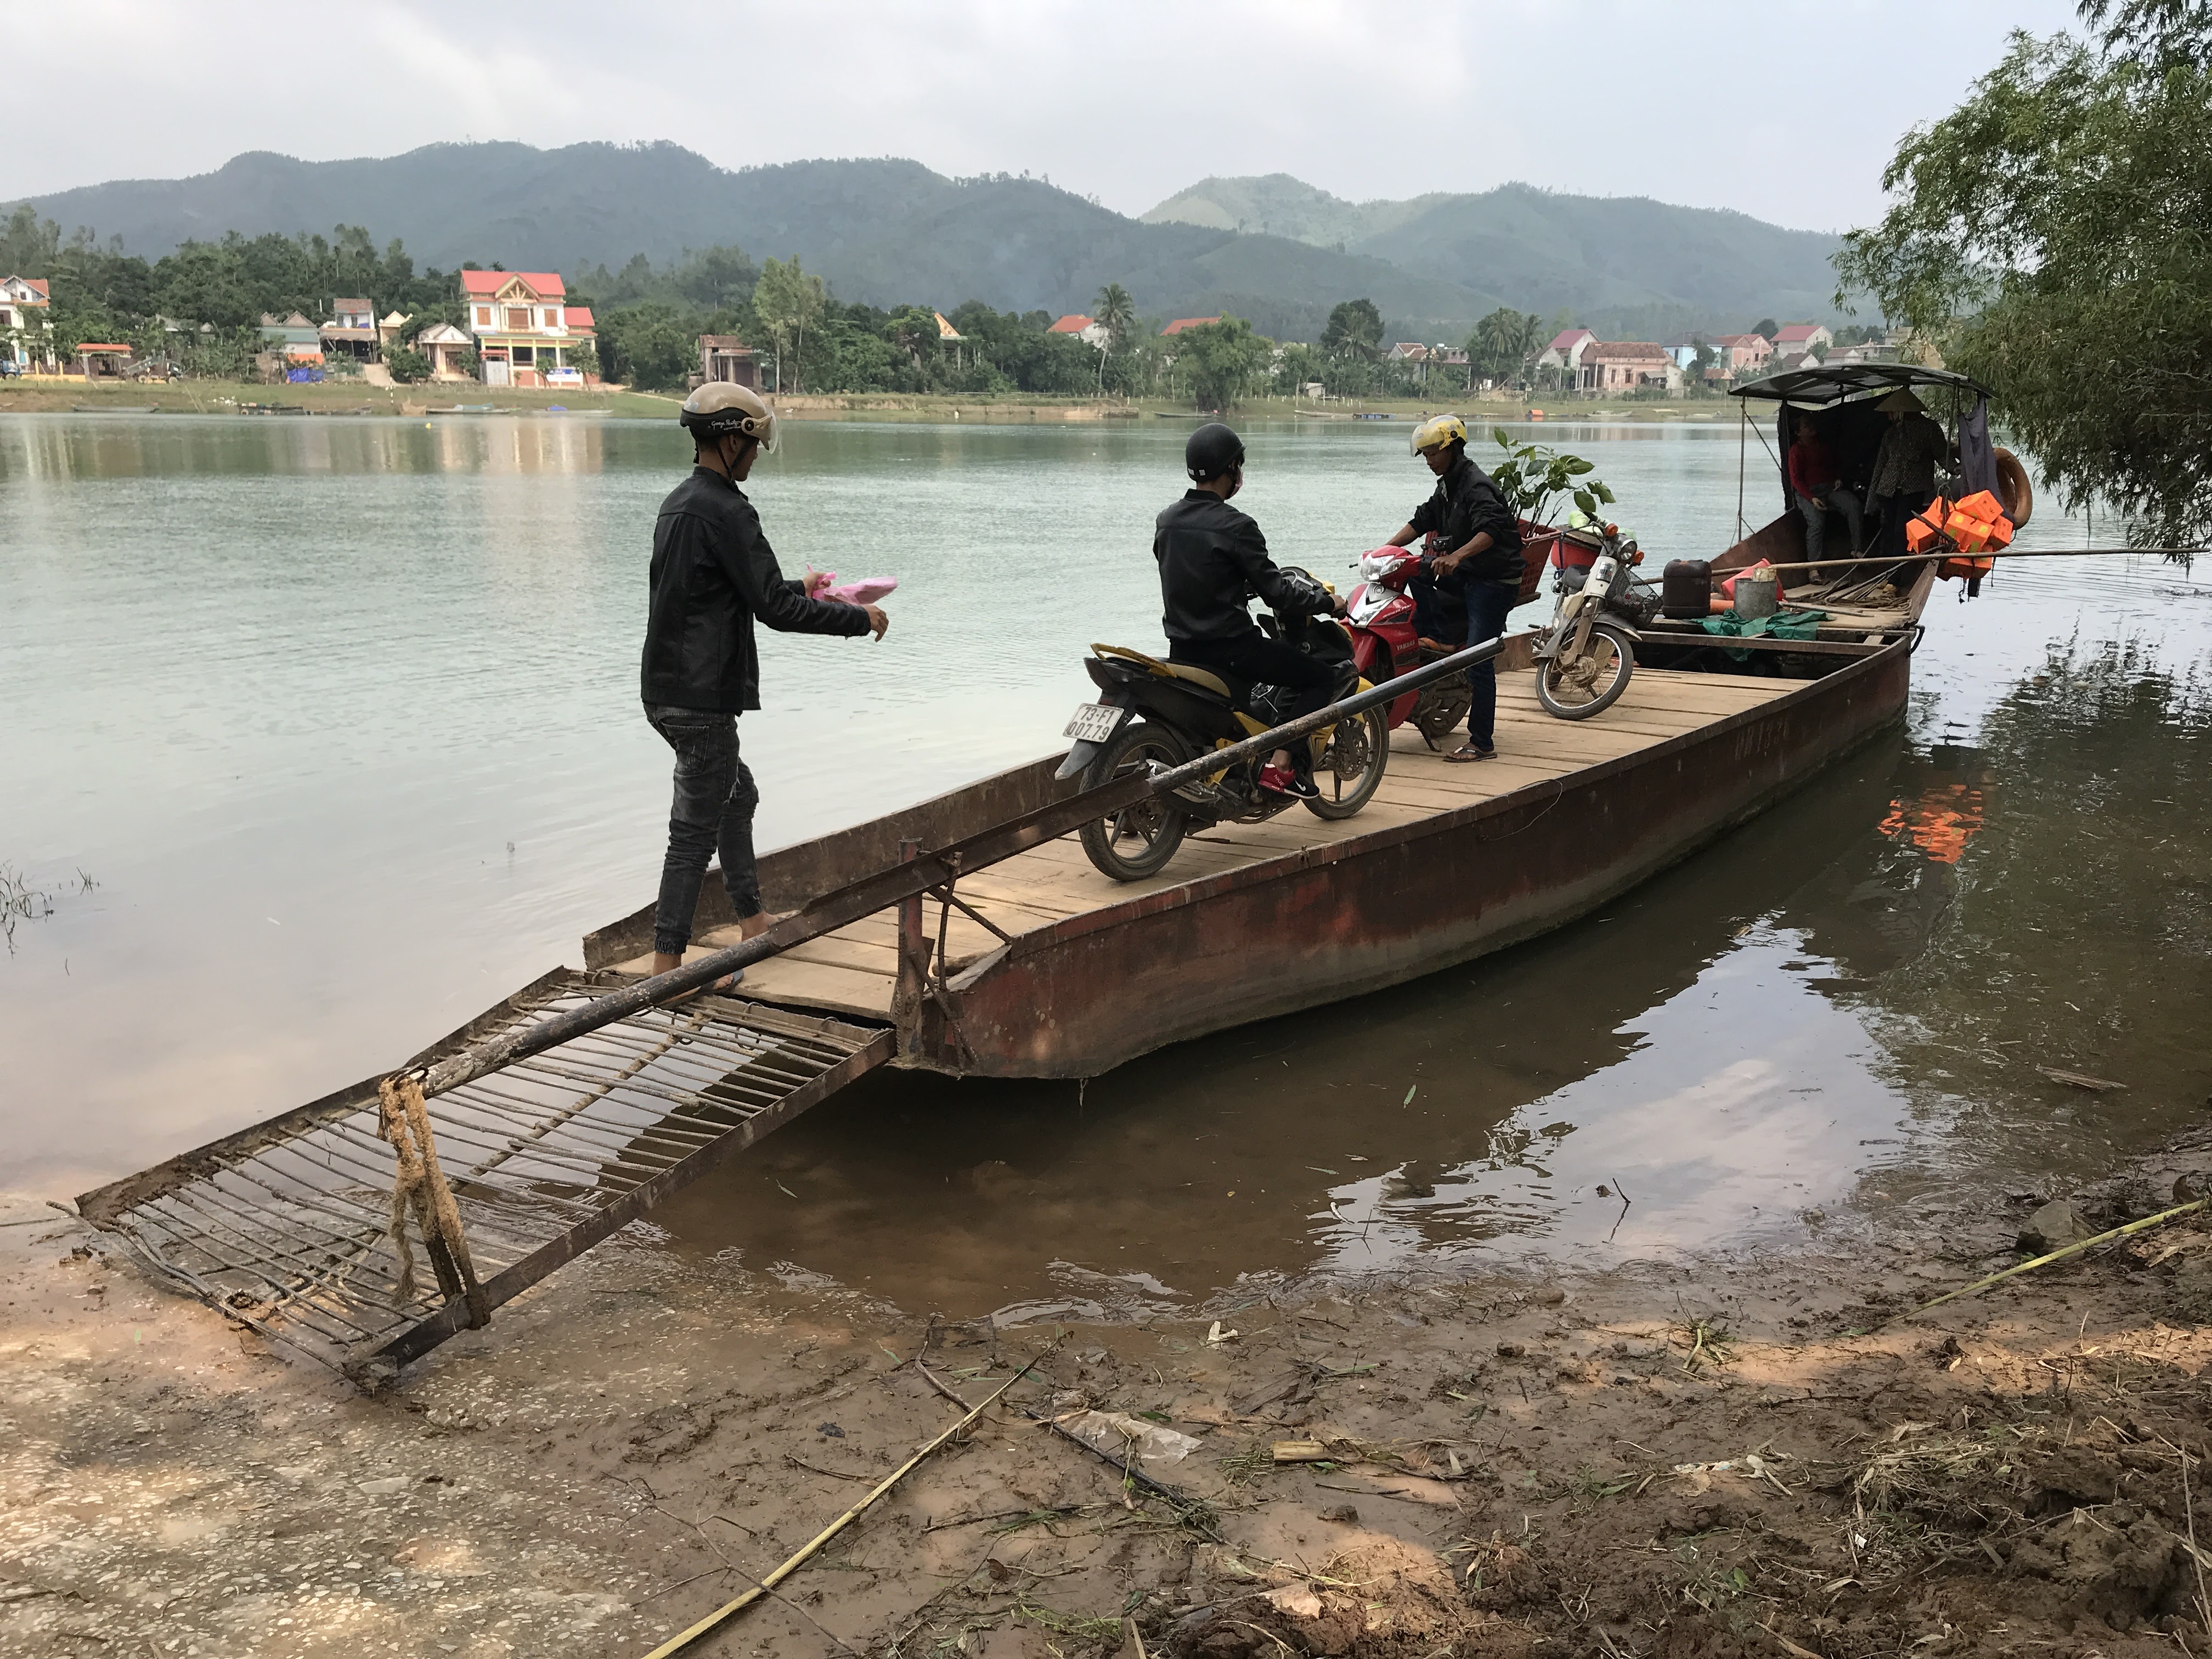 Motorbike boat taxi across a river in Vietnam.